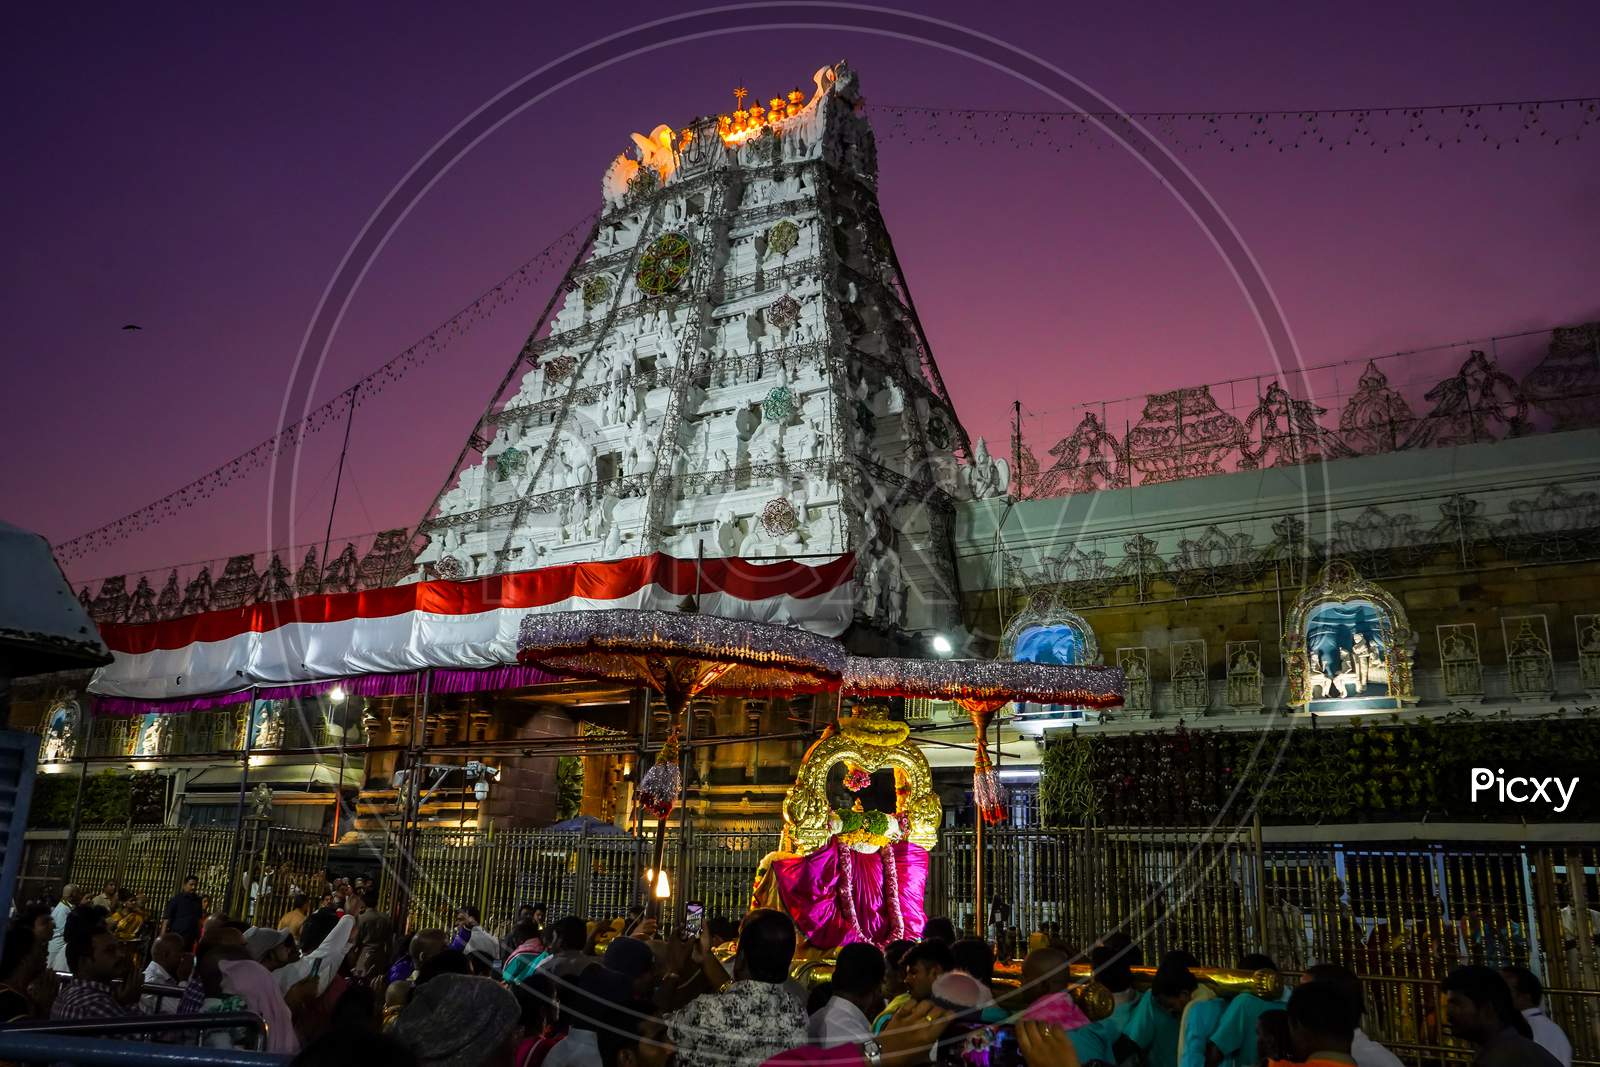 Tirumala temple with a procession of idols